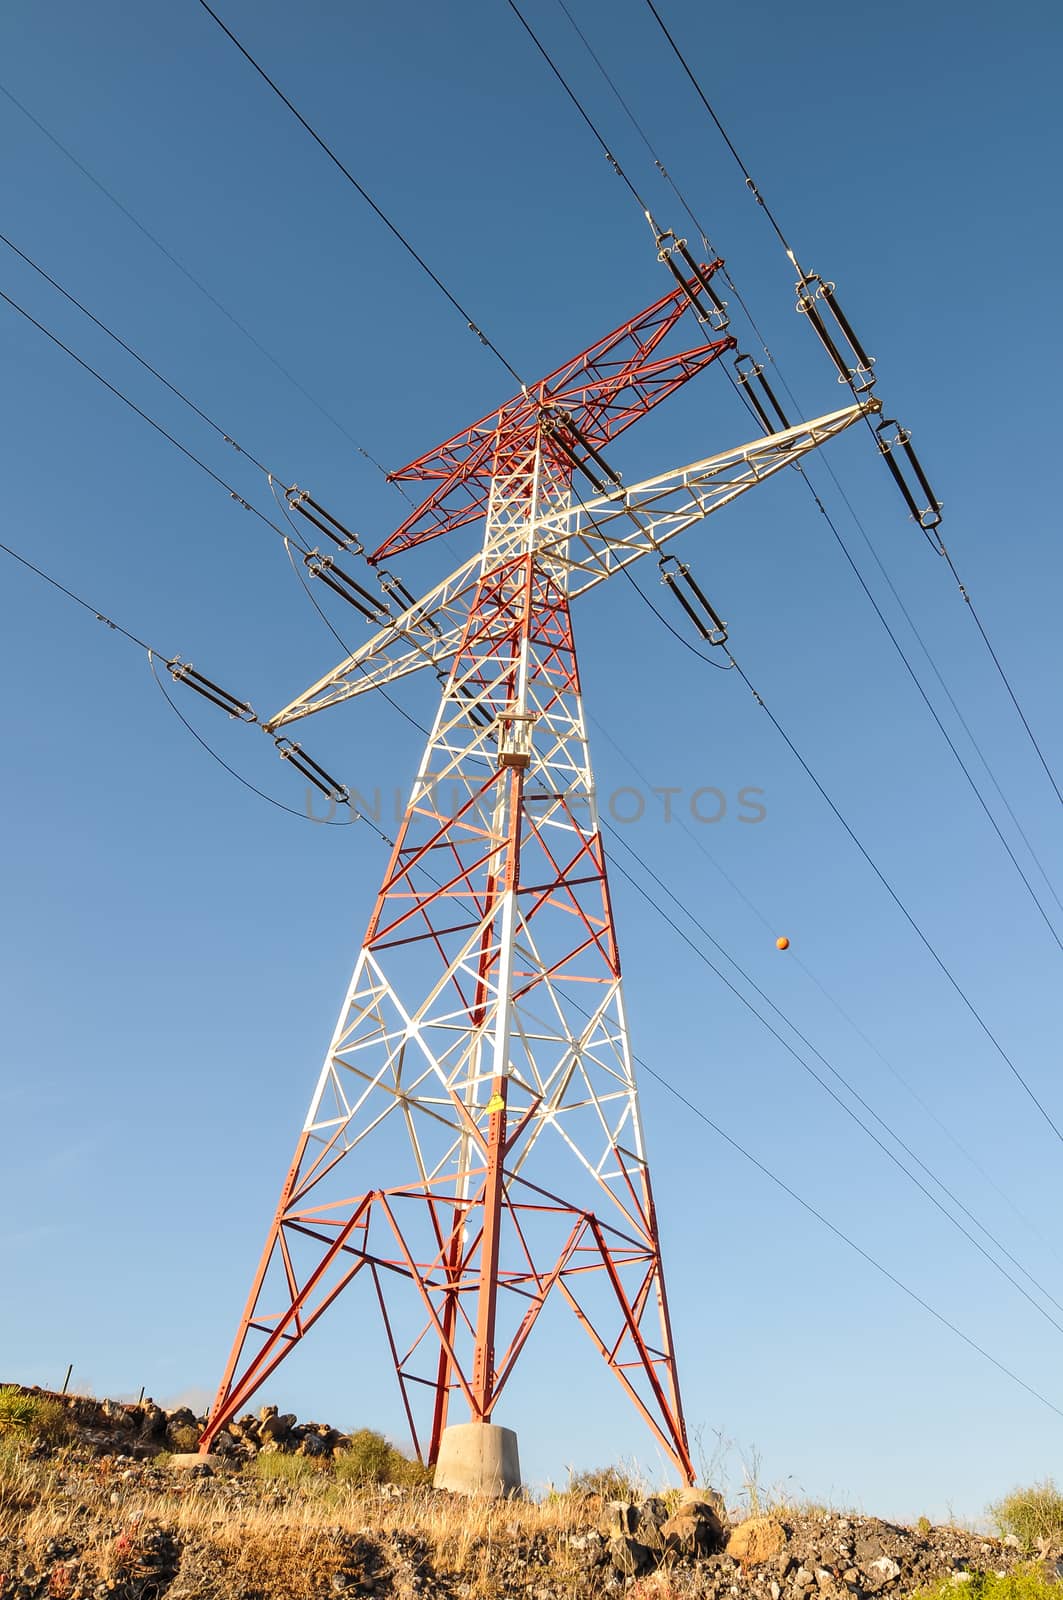 Energy Electricity Power Pylon on a Blue Sky